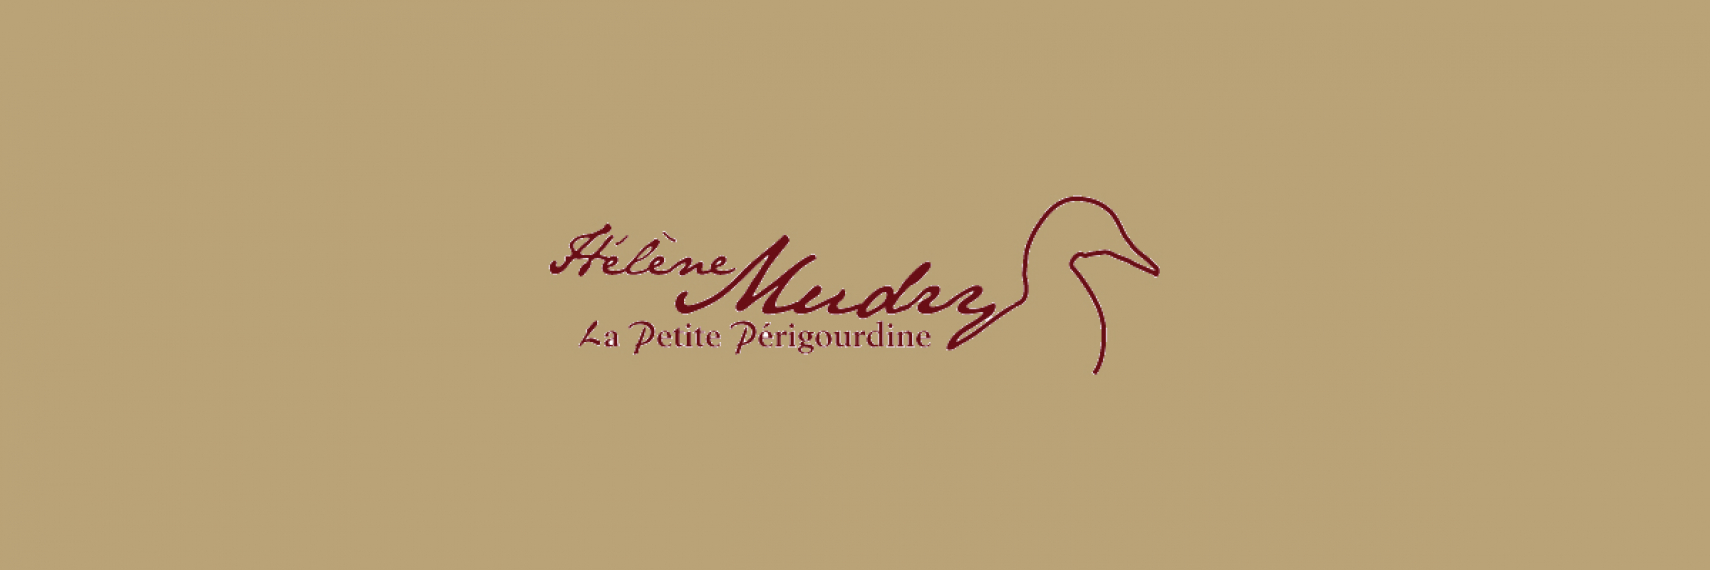 Foie gras Helene Mudry